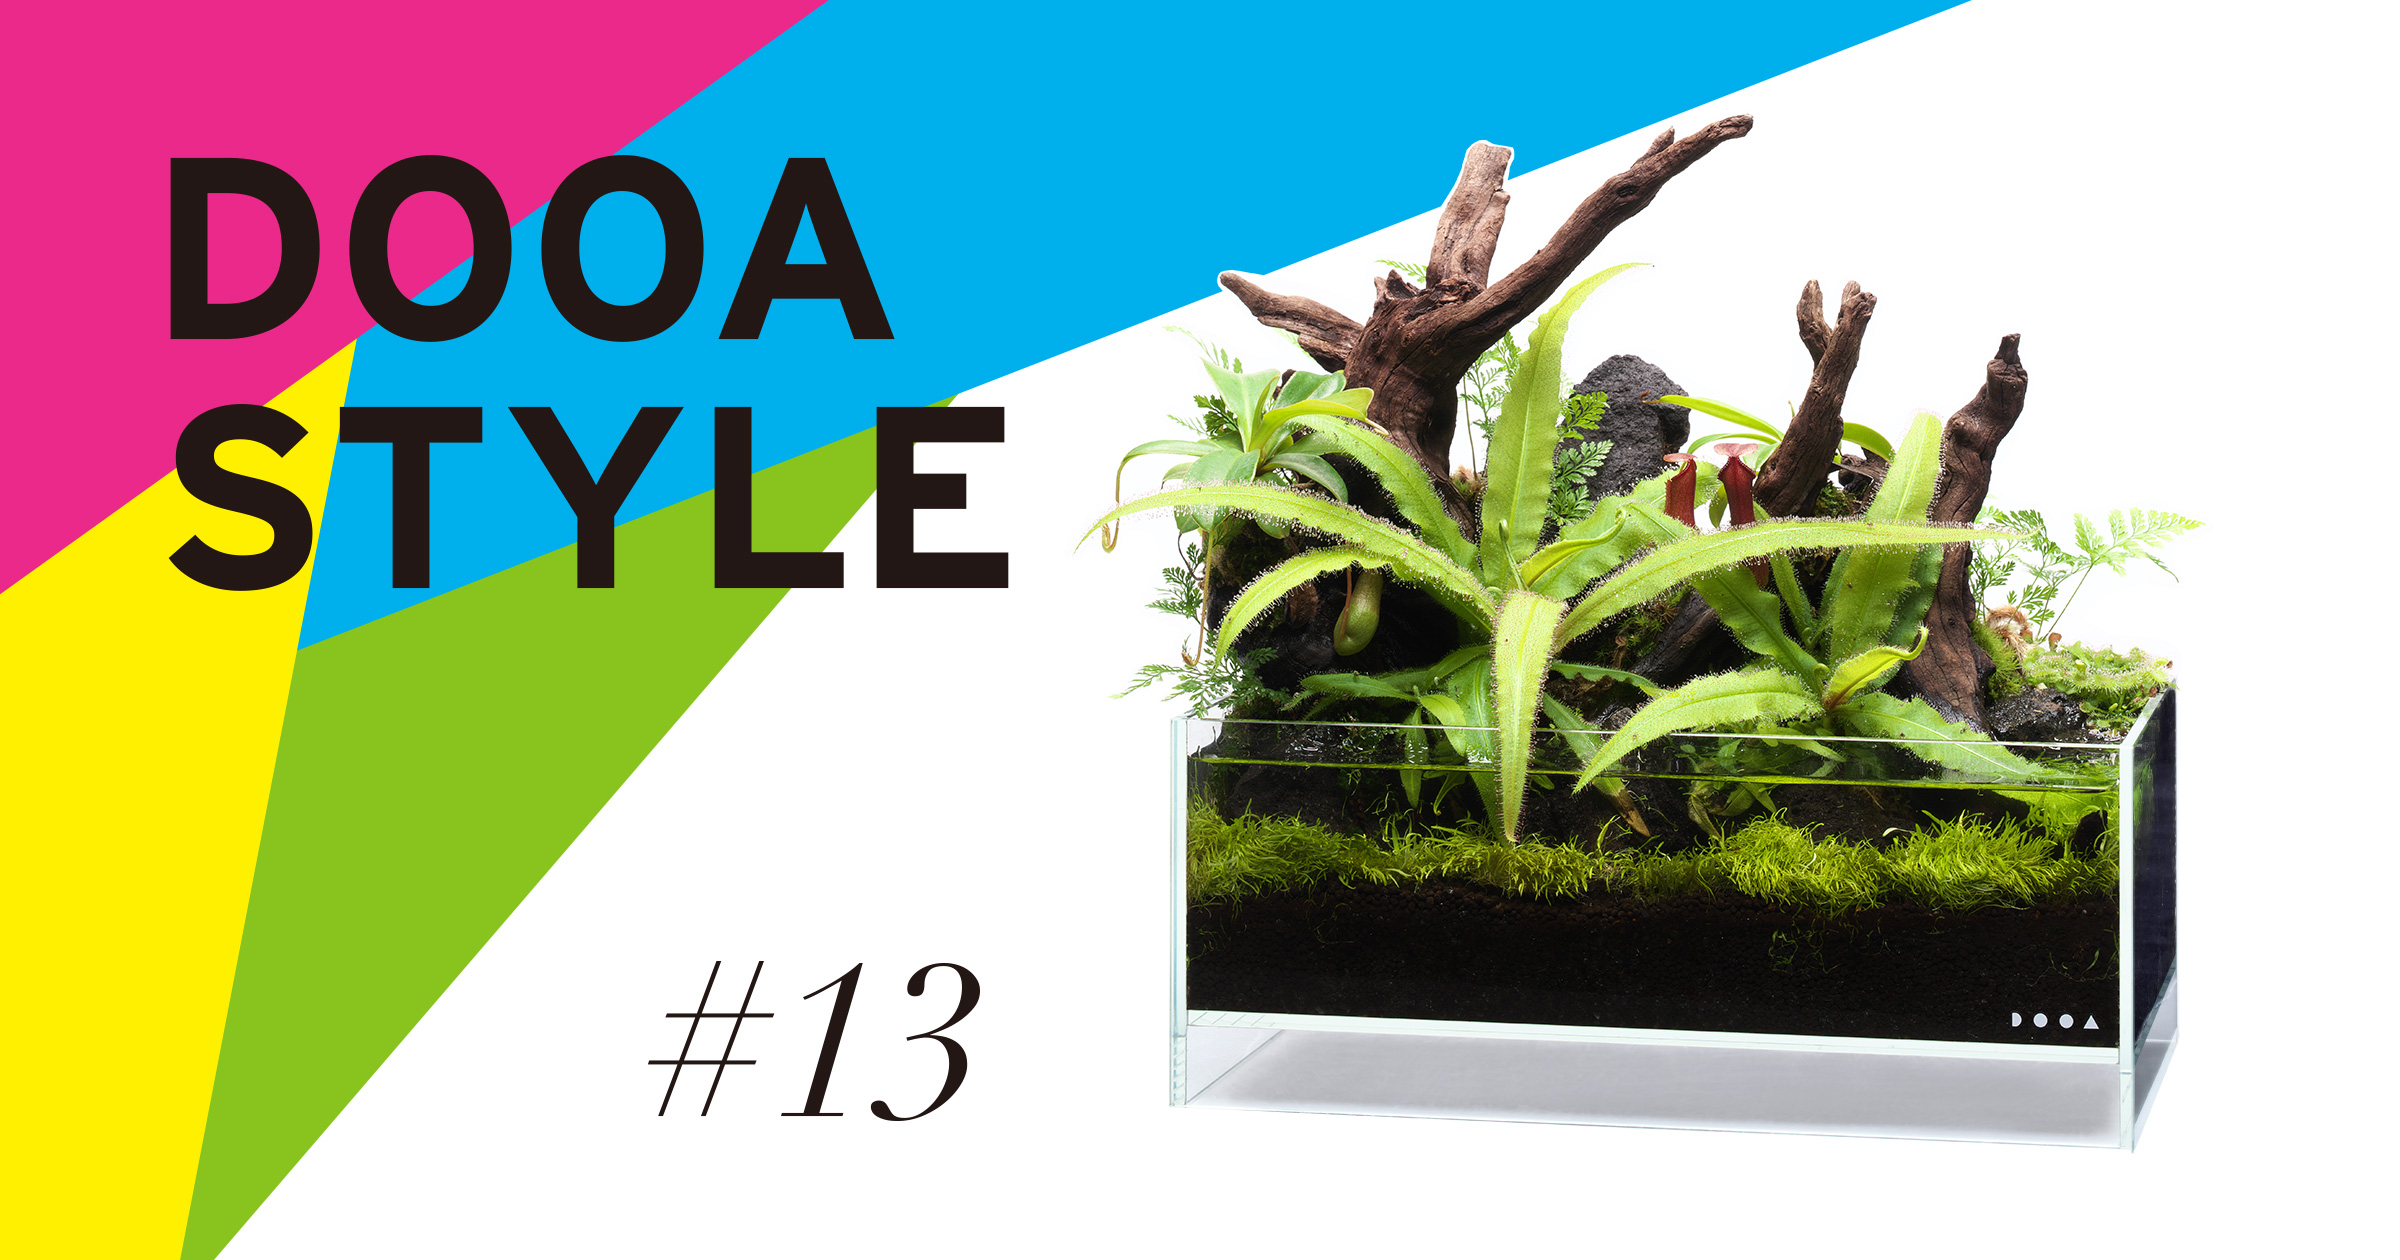 DOOA STYLE #13  Enjoy Carnivorous plants in an open-style aquarium.